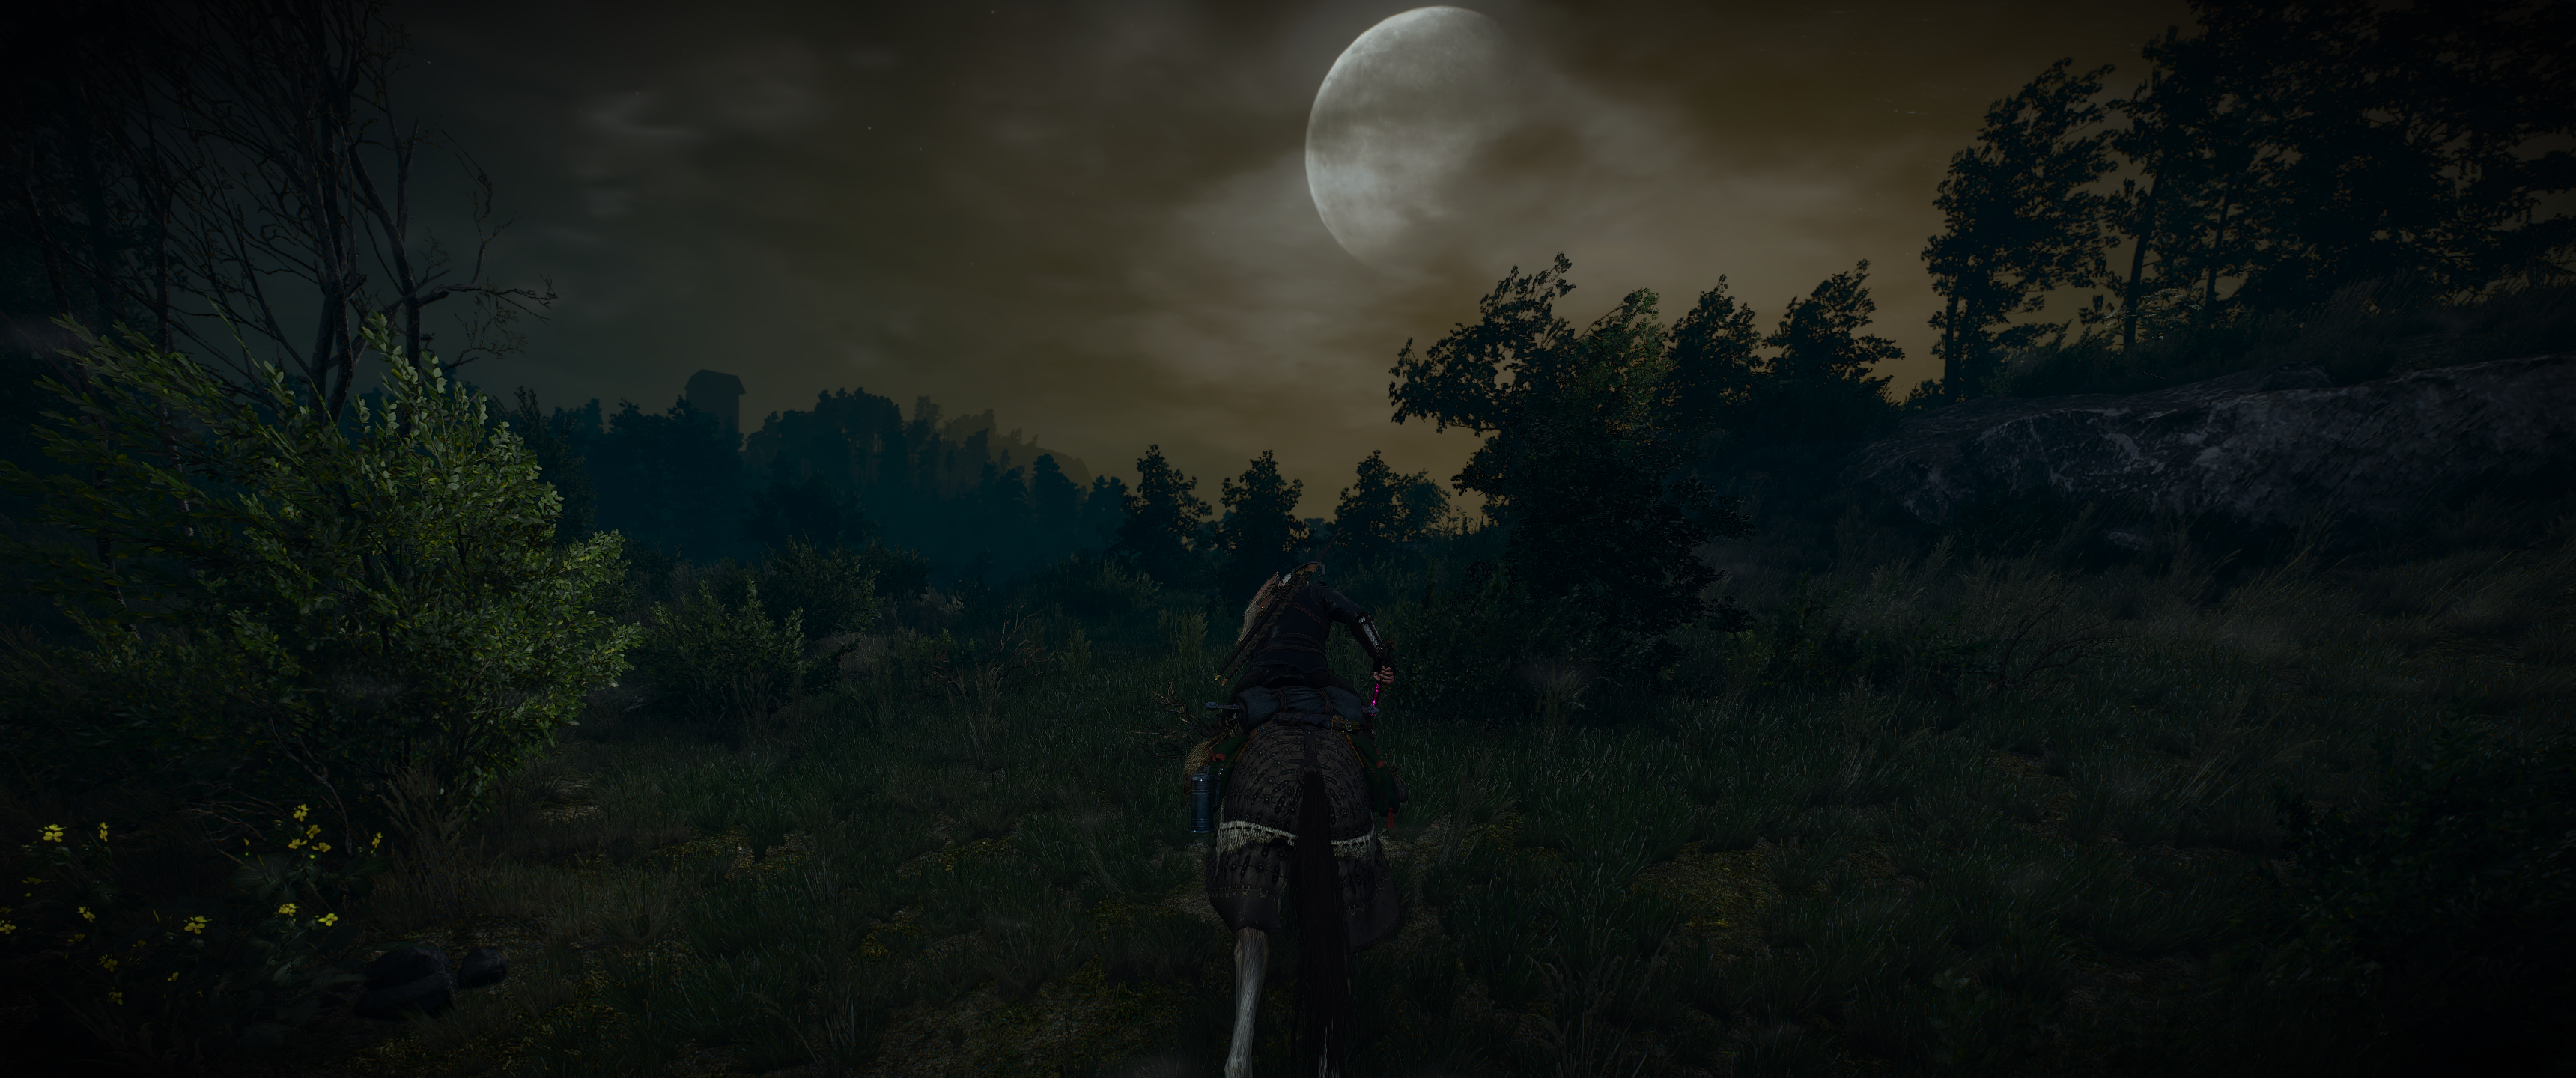 PC Gaming The Witcher The Witcher 3 Wild Hunt Landscape Cirilla Ciri Triss Merigold Geralt Of Rivia  3440x1440